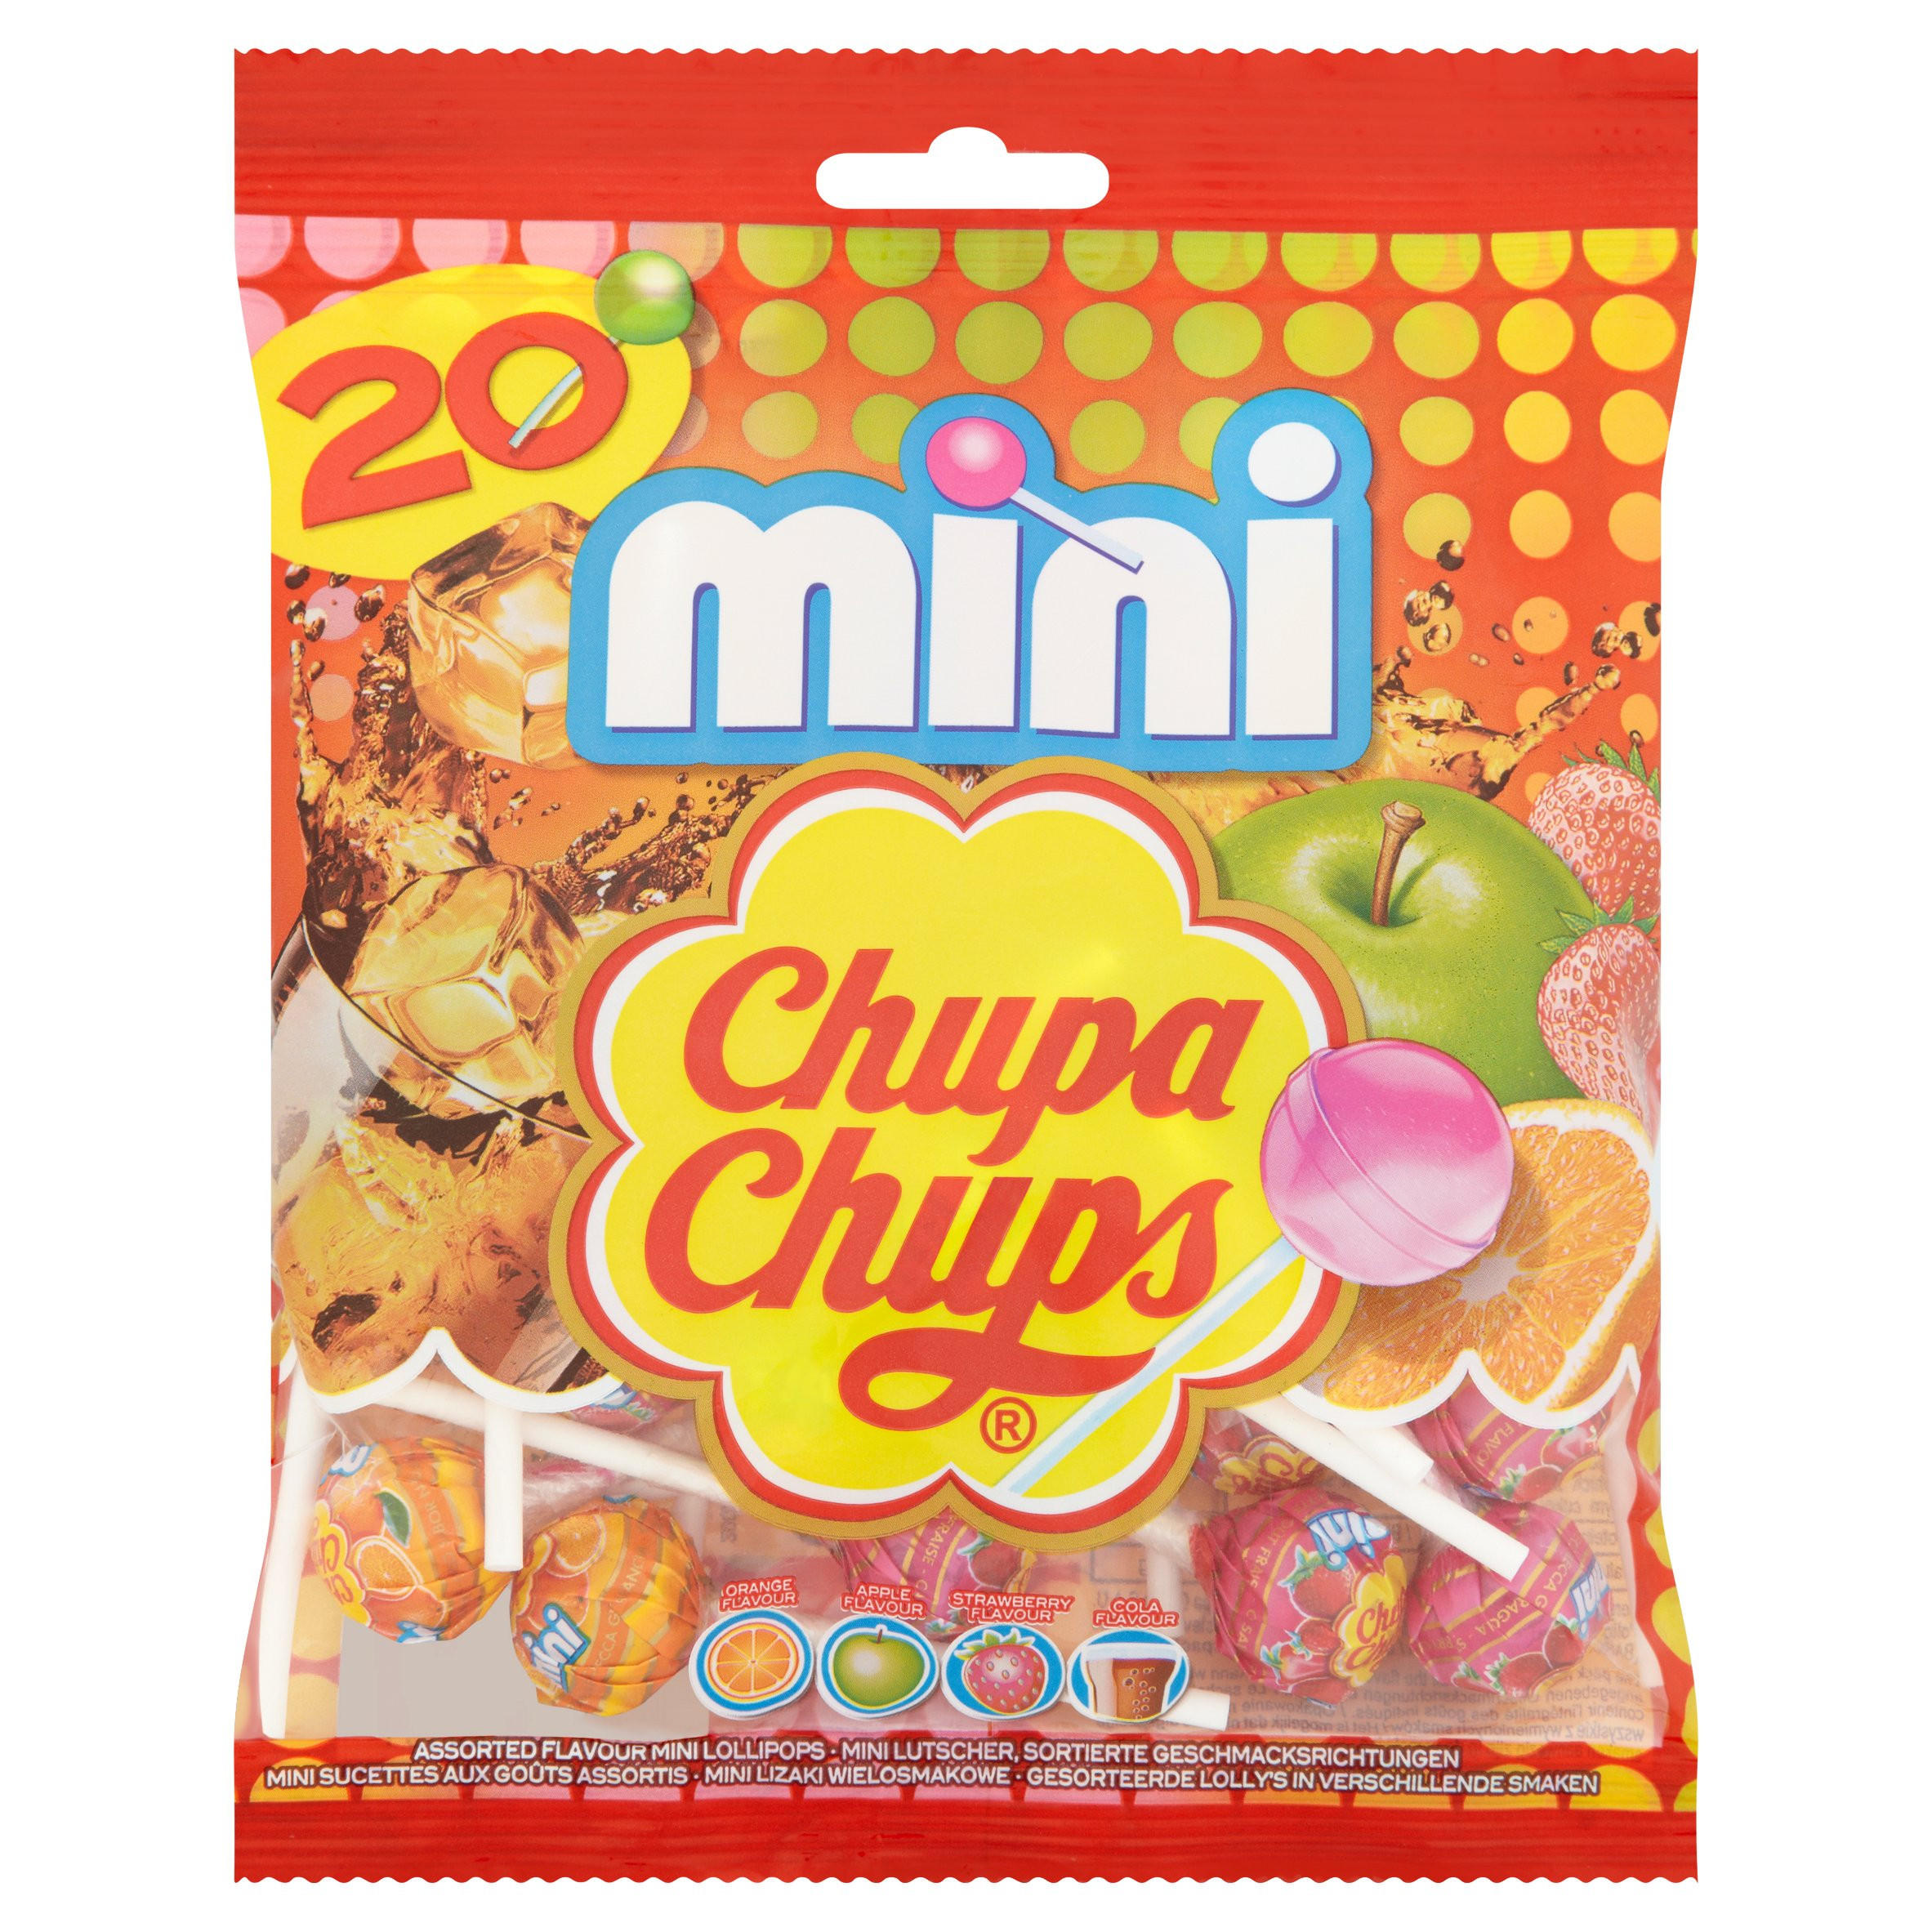 Lollipop Chupa Chups Yogurt Flavor 40 pack - Buy at My Mexican Candy